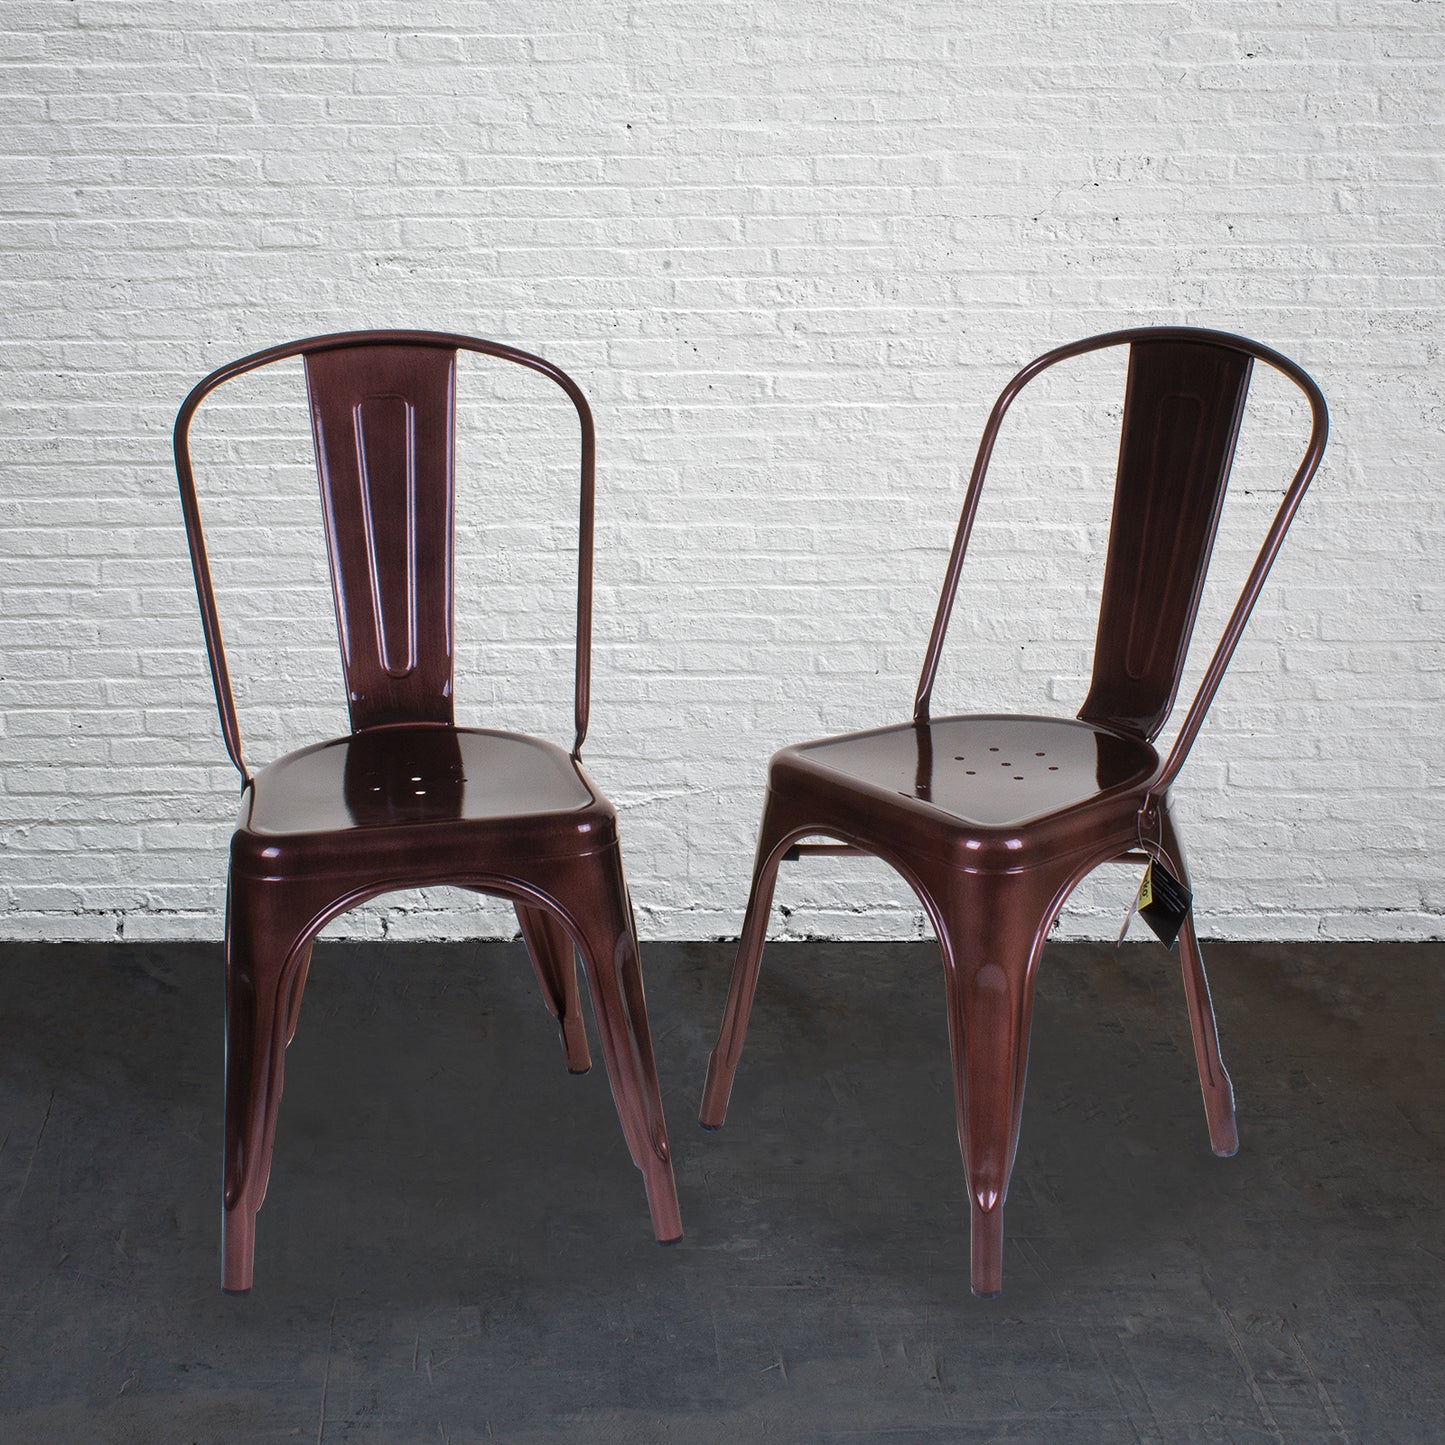 Siena Chair - Vintage Copper